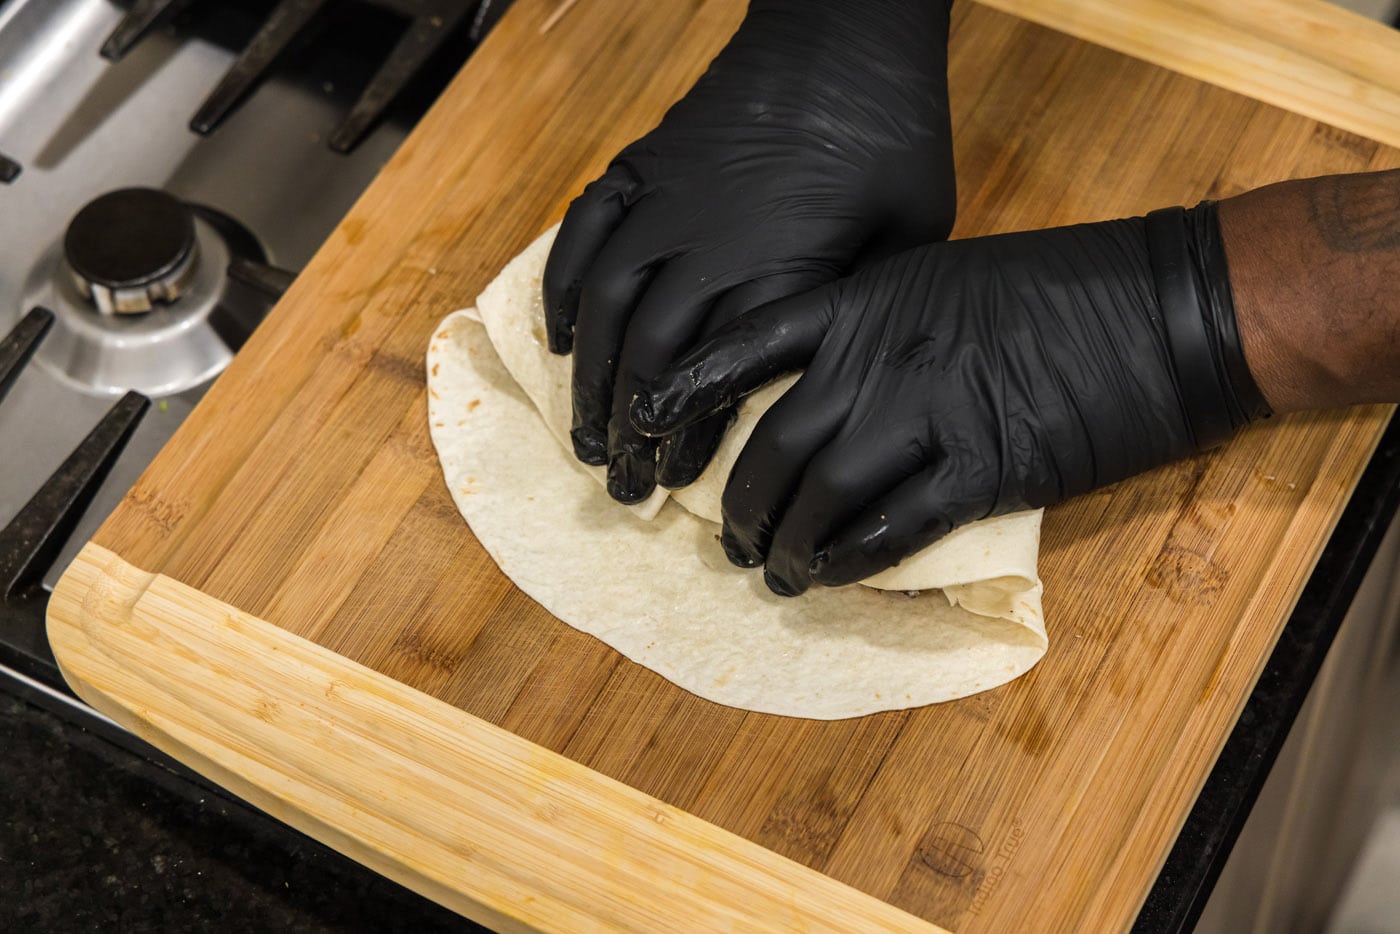 hands rolling a burrito